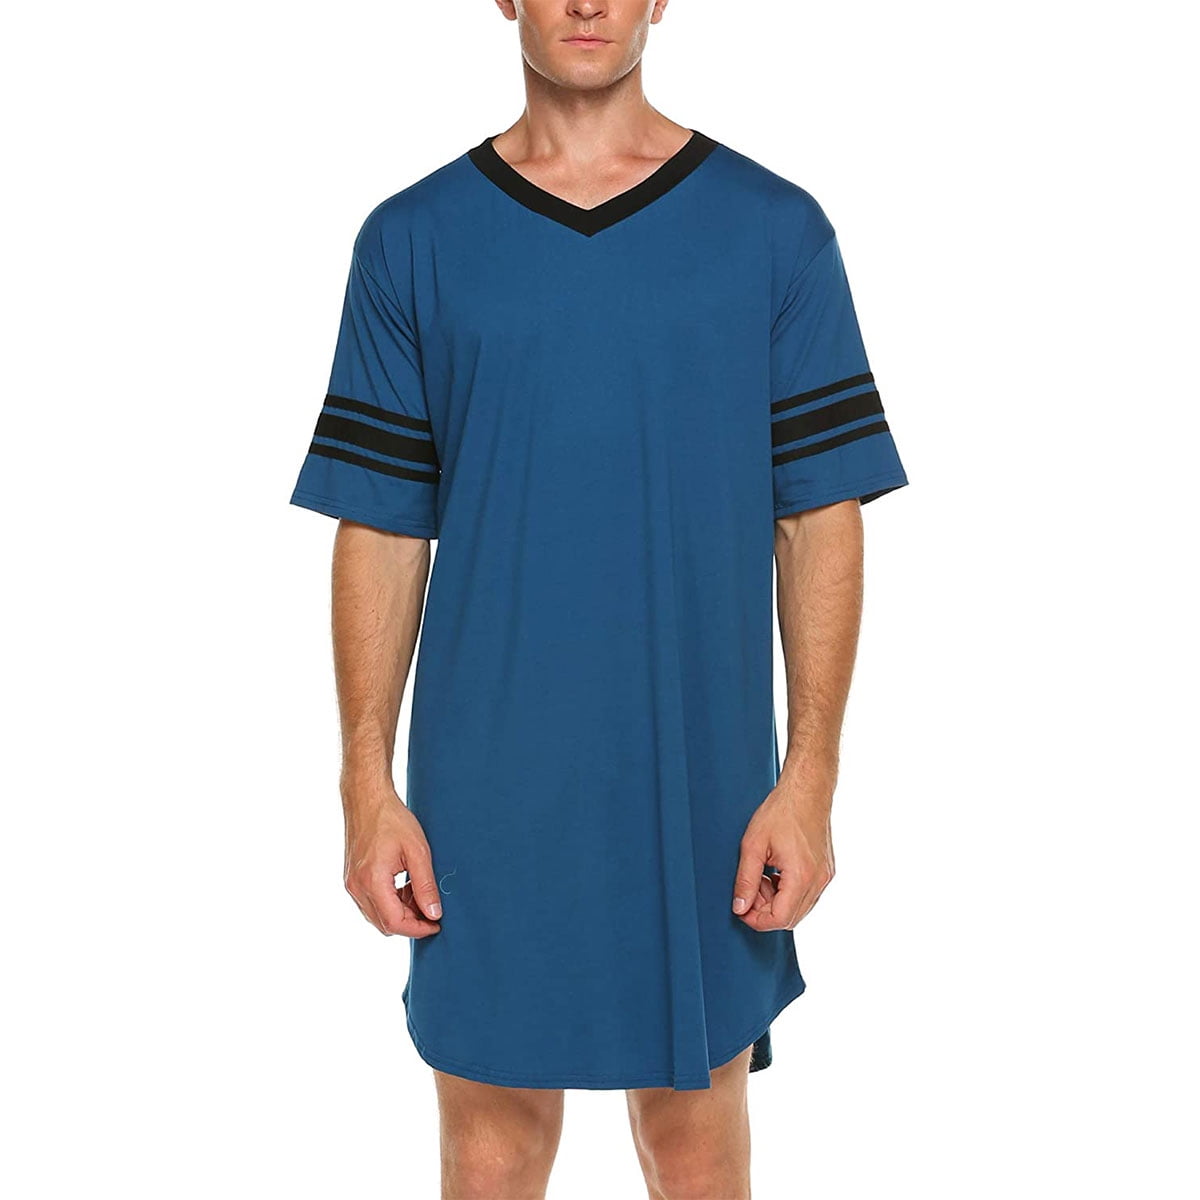 Cotton Nightwear Comfy Big&Tall V Neck Short Sleeve Soft Loose Pajama Sleep Nightdress Robes S-XXXL Mucwer Men's Nightshirt